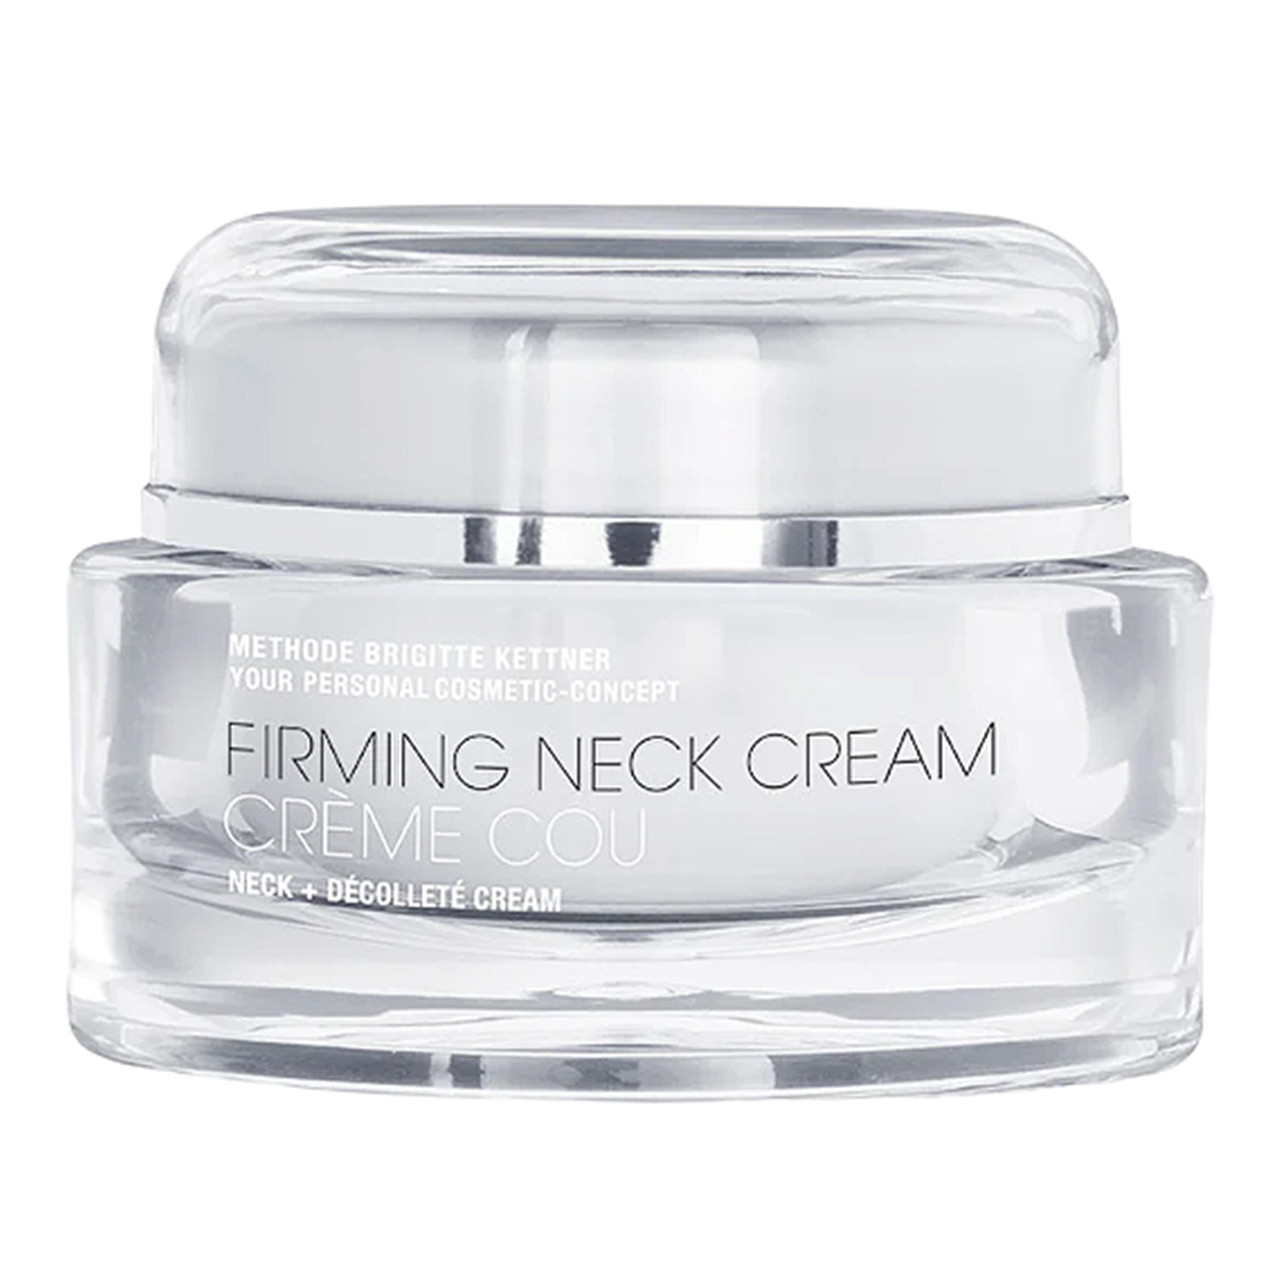 MBK Skincare Firming Neck Cream - 1.69 oz 